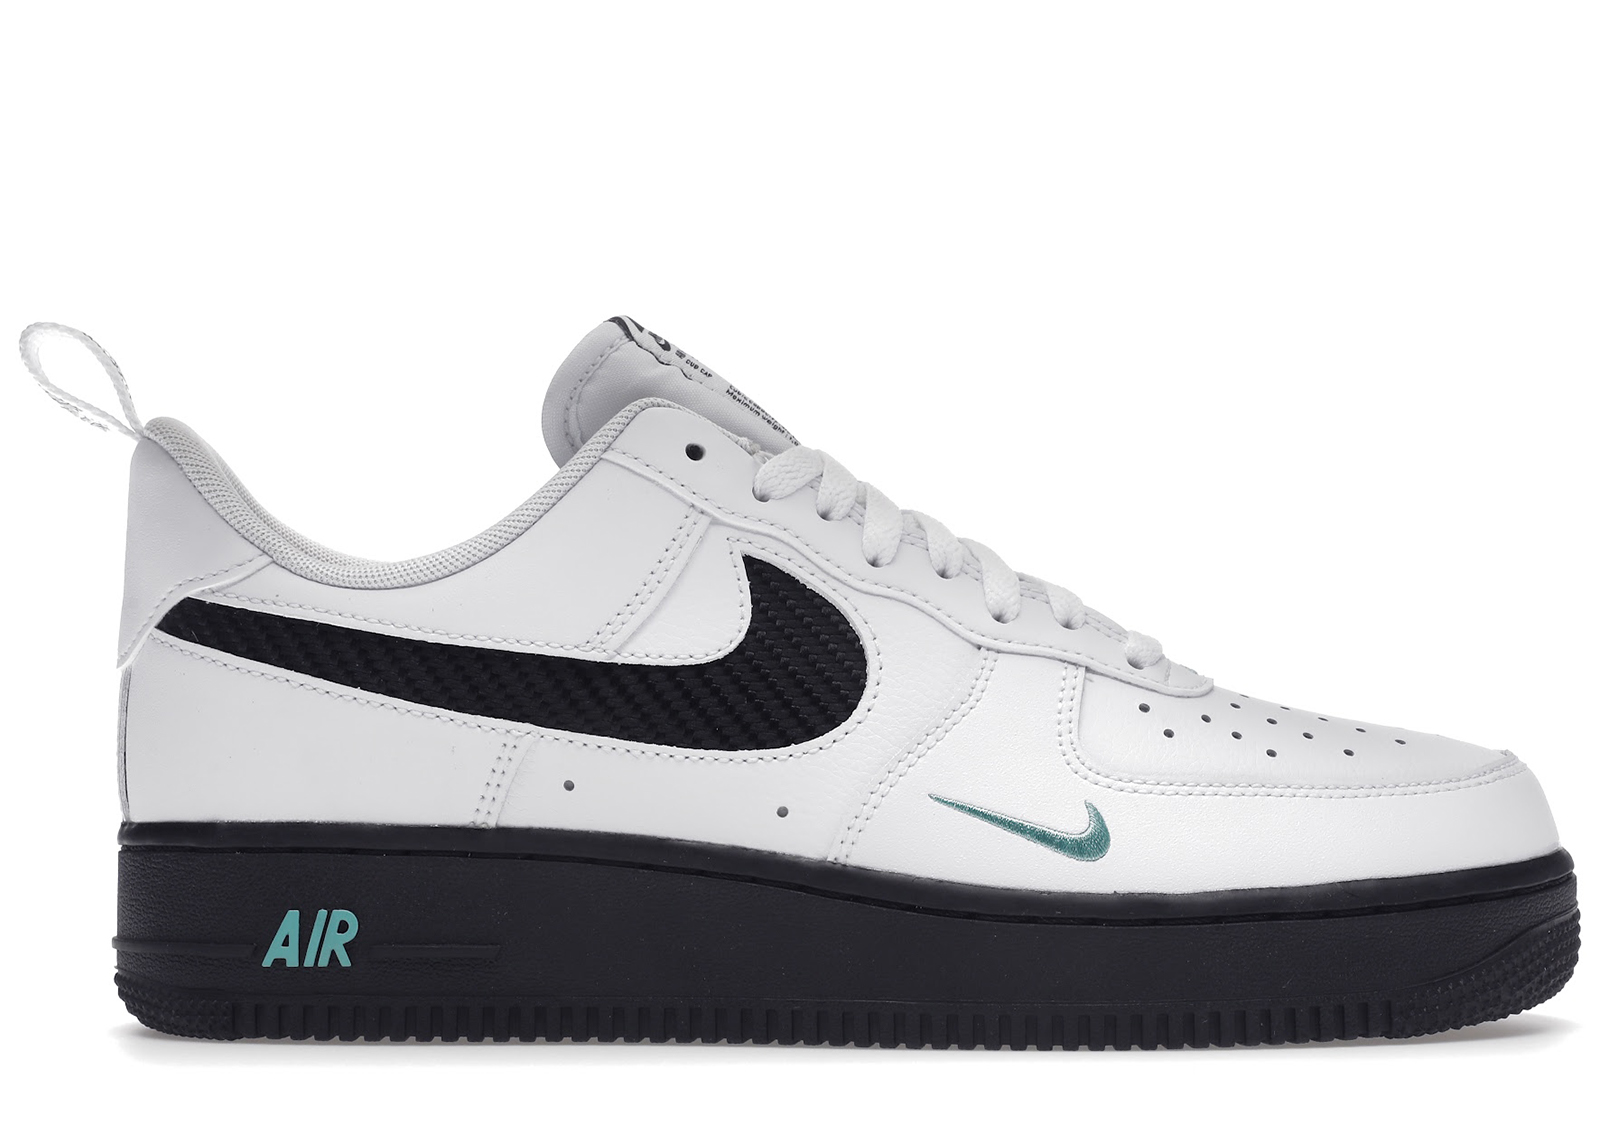 Nike Air Force 1 Low White Black Teal